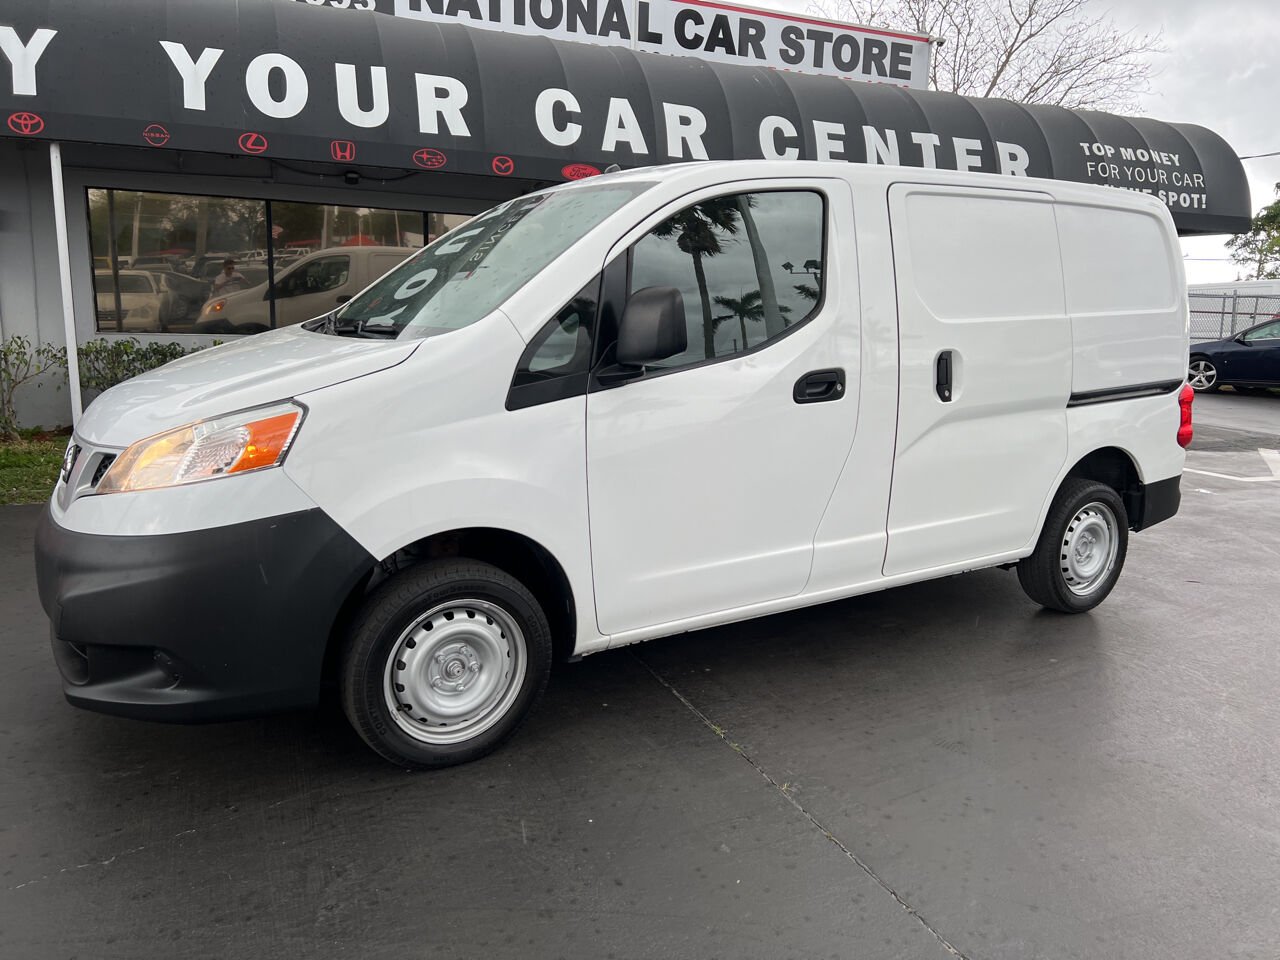 2018 NISSAN NV200 Van - $16,900